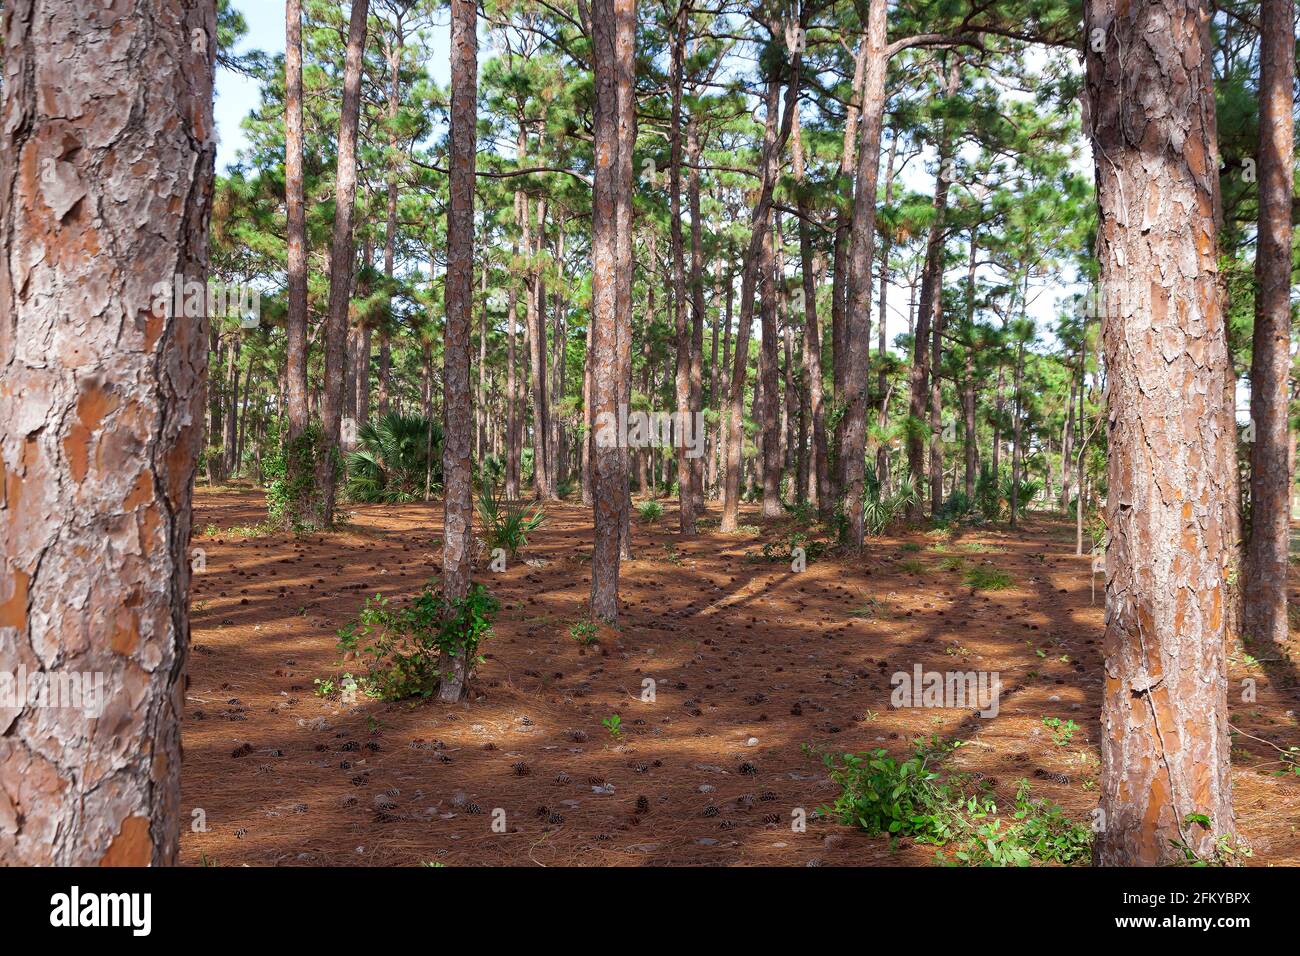 Florida del Sud / Southern Slash Pine Trees (Pinus elliottii) in Caloosa Park, Boynton Beach, Palm Beach County, Florida. Foto Stock